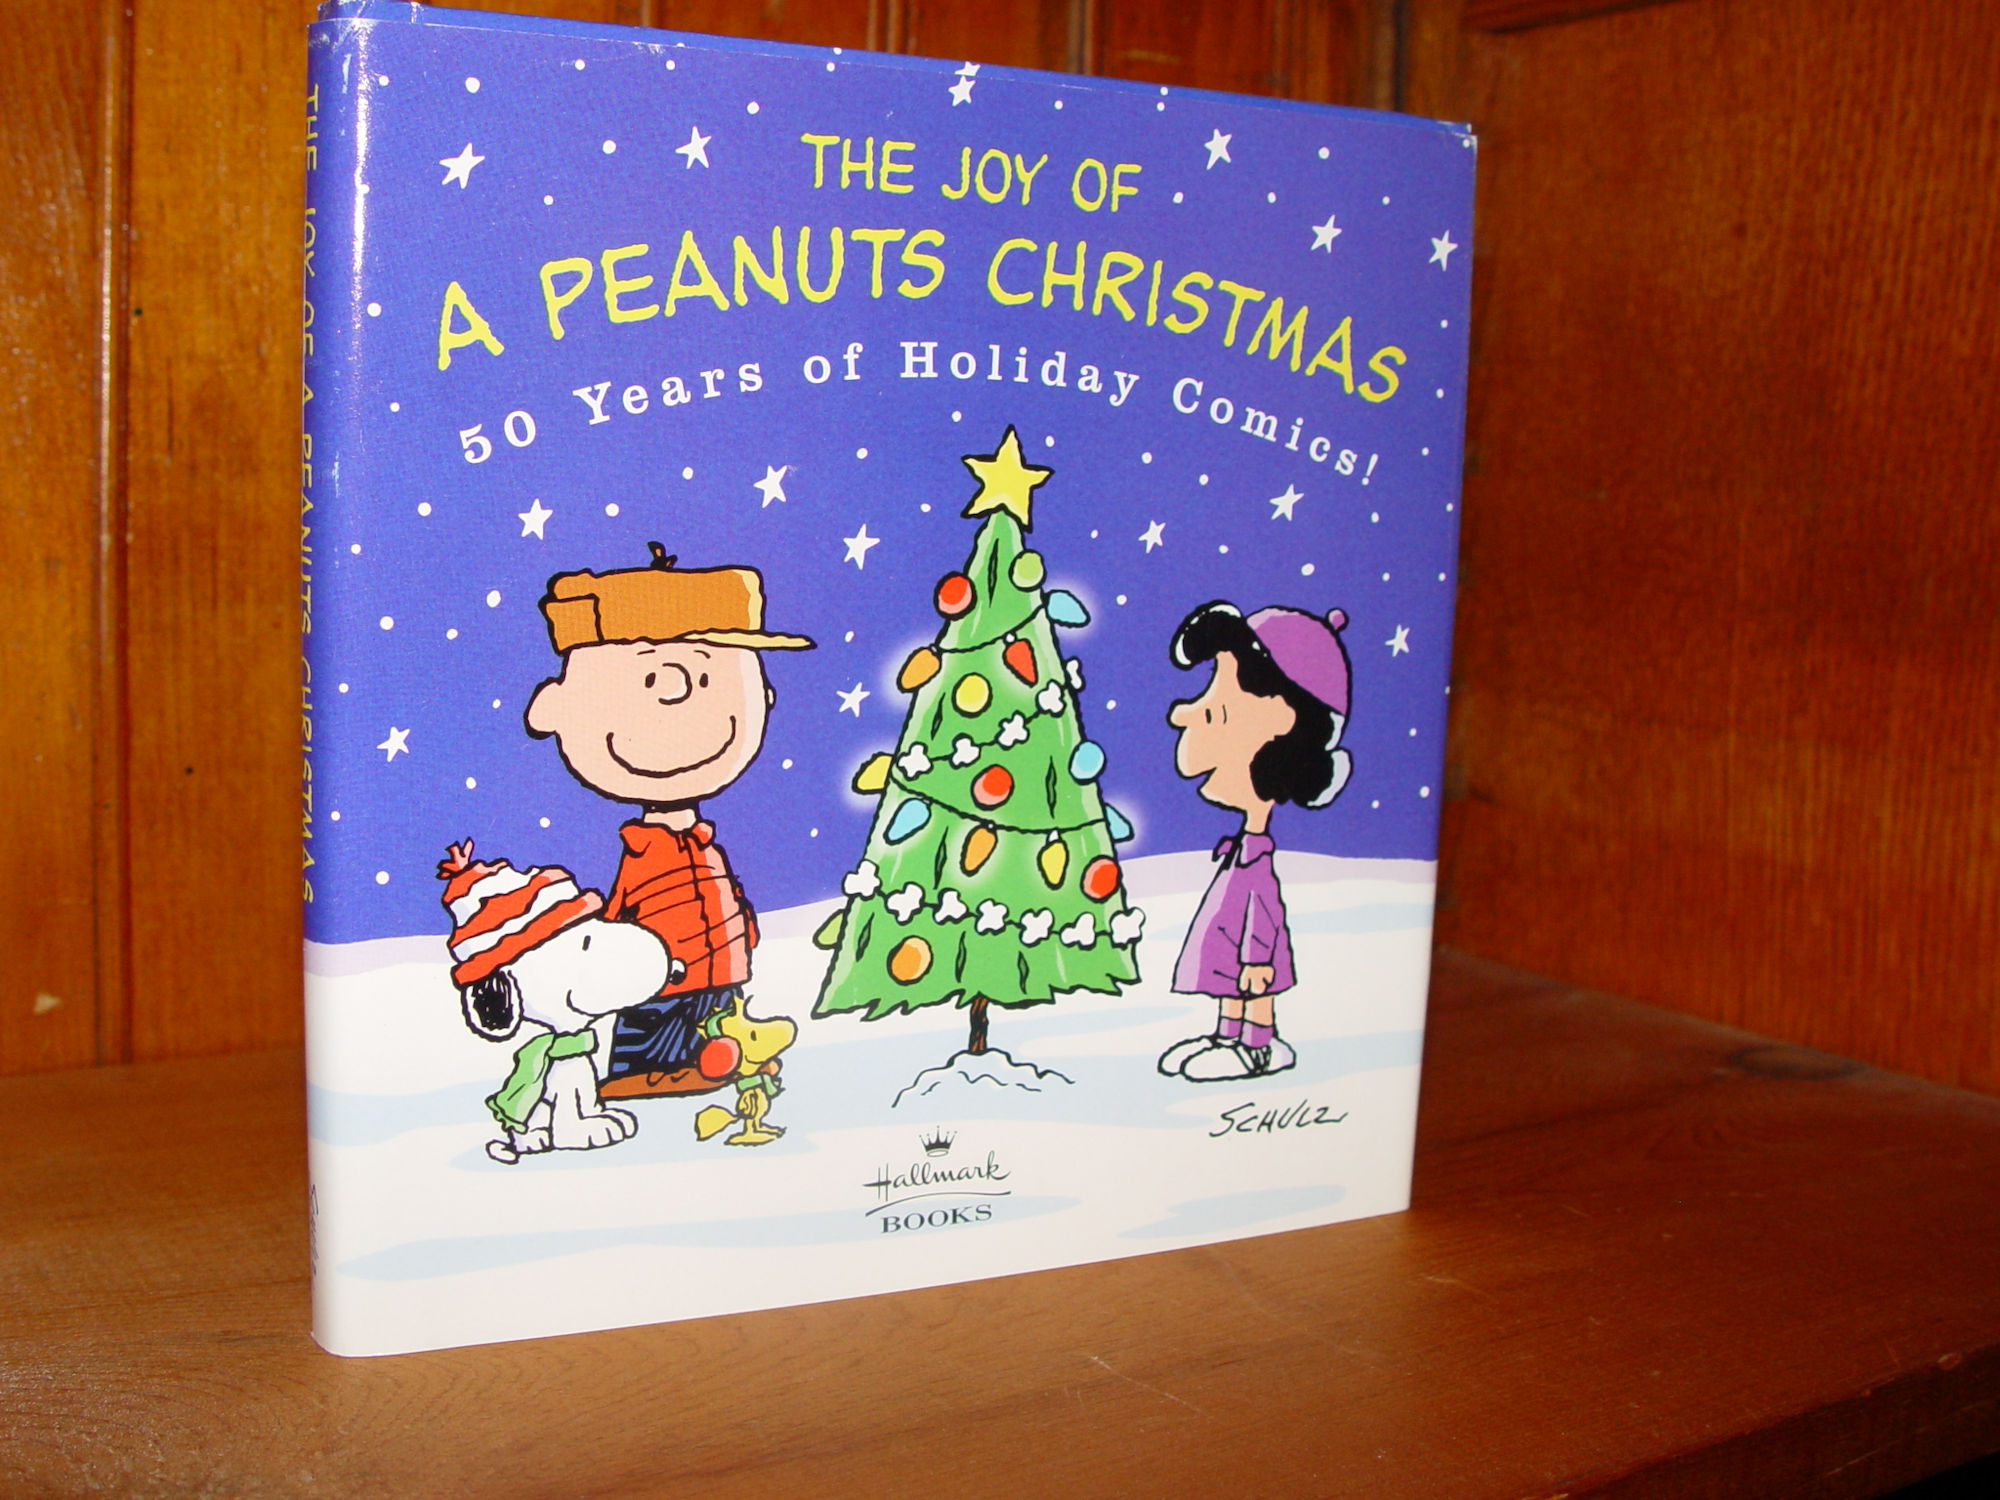 The Joy of a Peanuts Christmas - 50 Years
                        of Holiday Comics! Hallmark Book